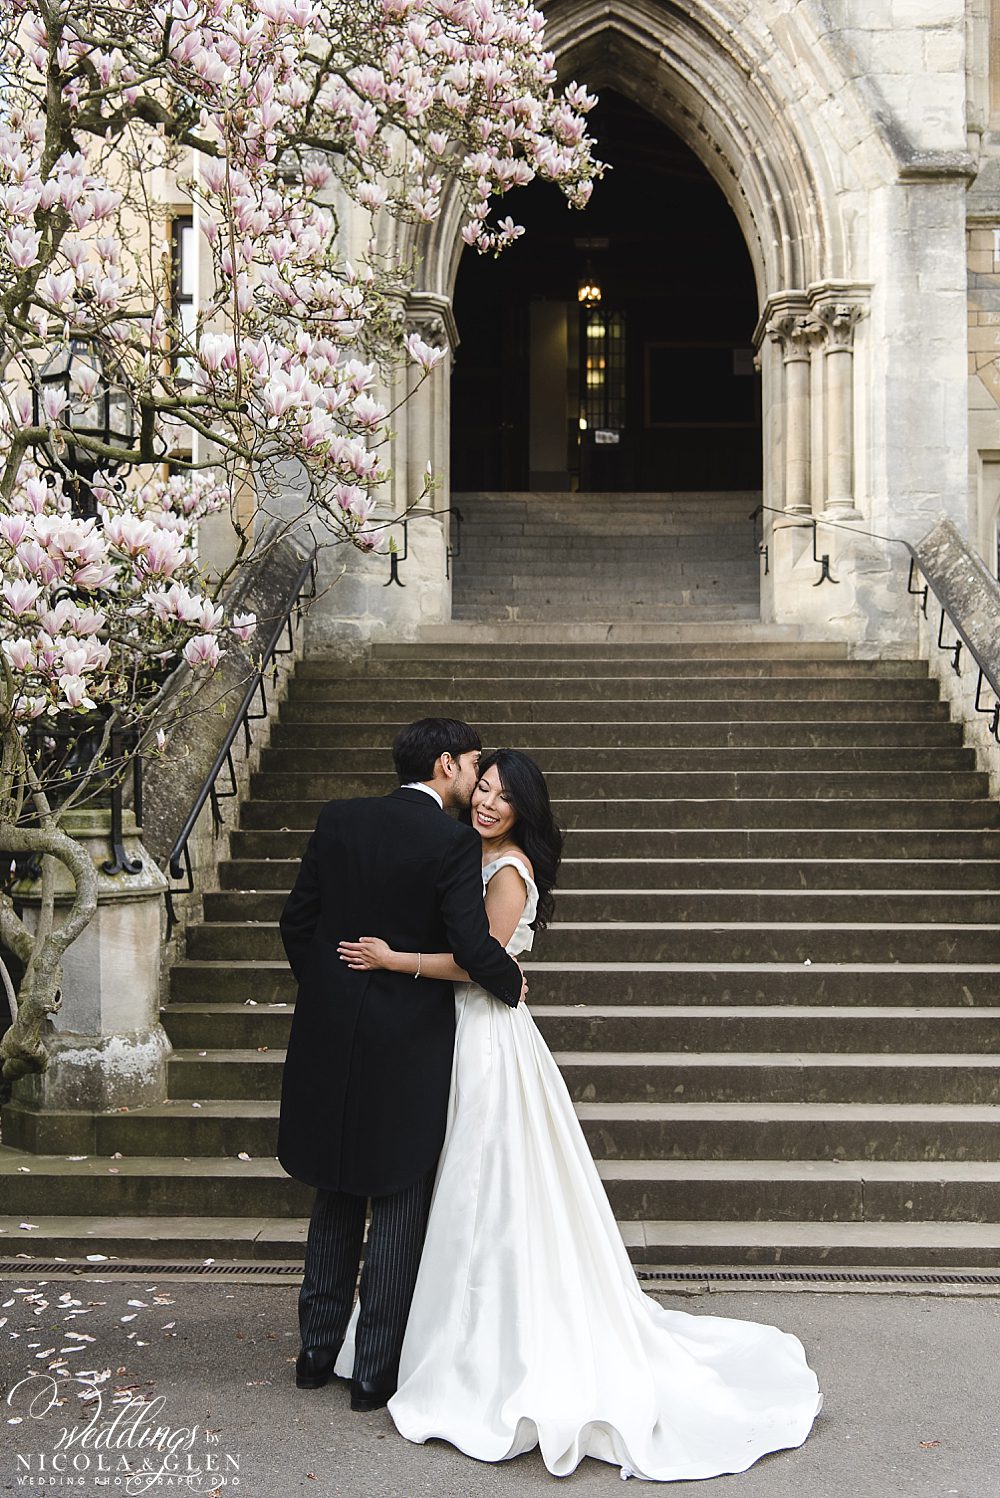 Bodleian Library Spring Wedding Photo